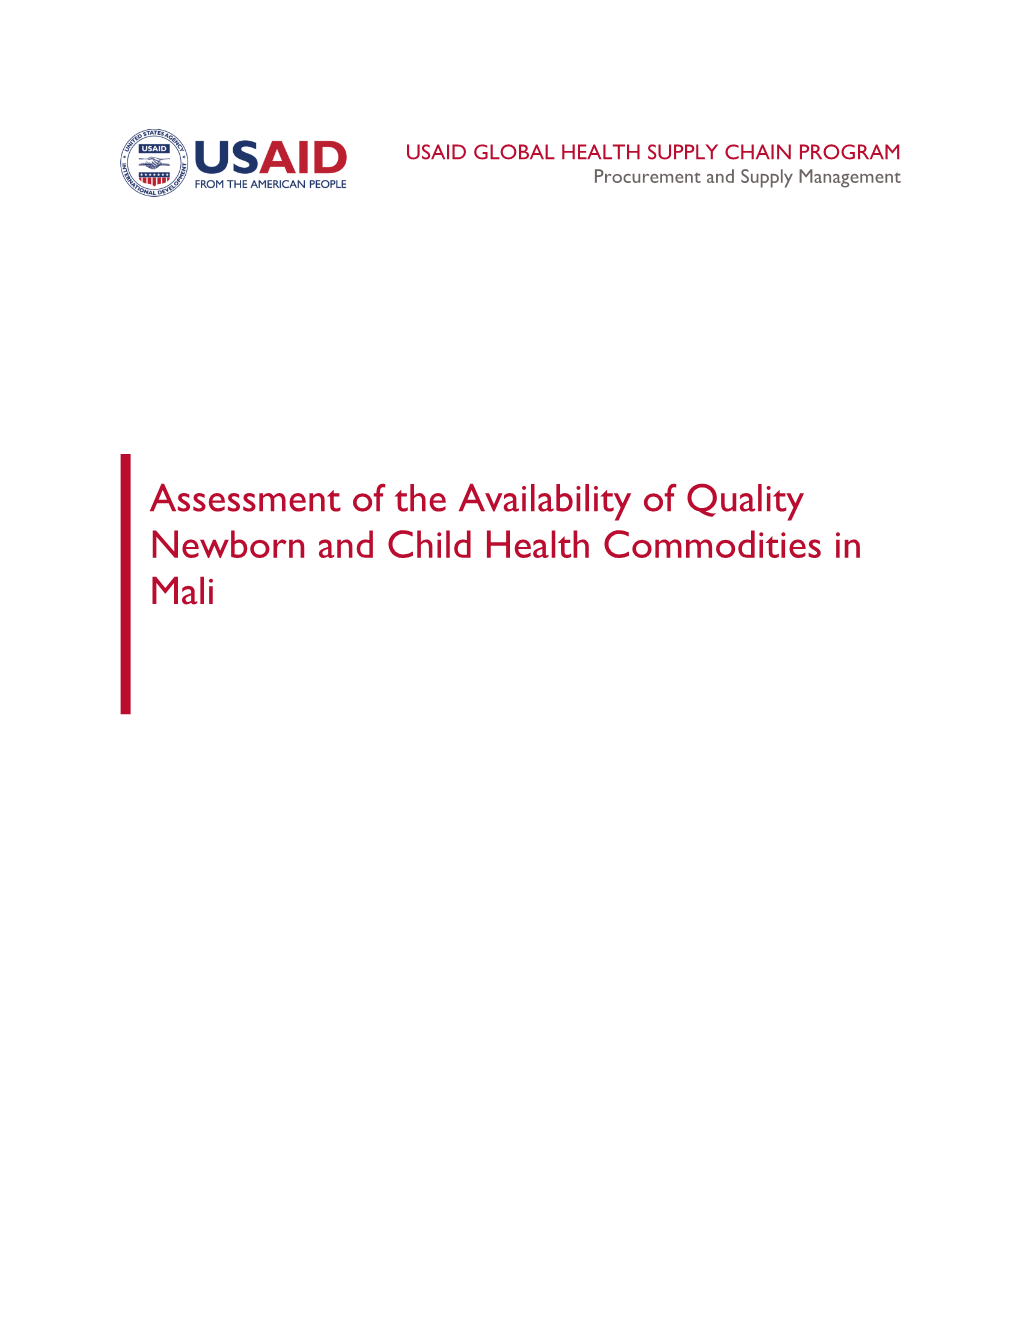 Mali NBCH Supply Chain Assessment Report